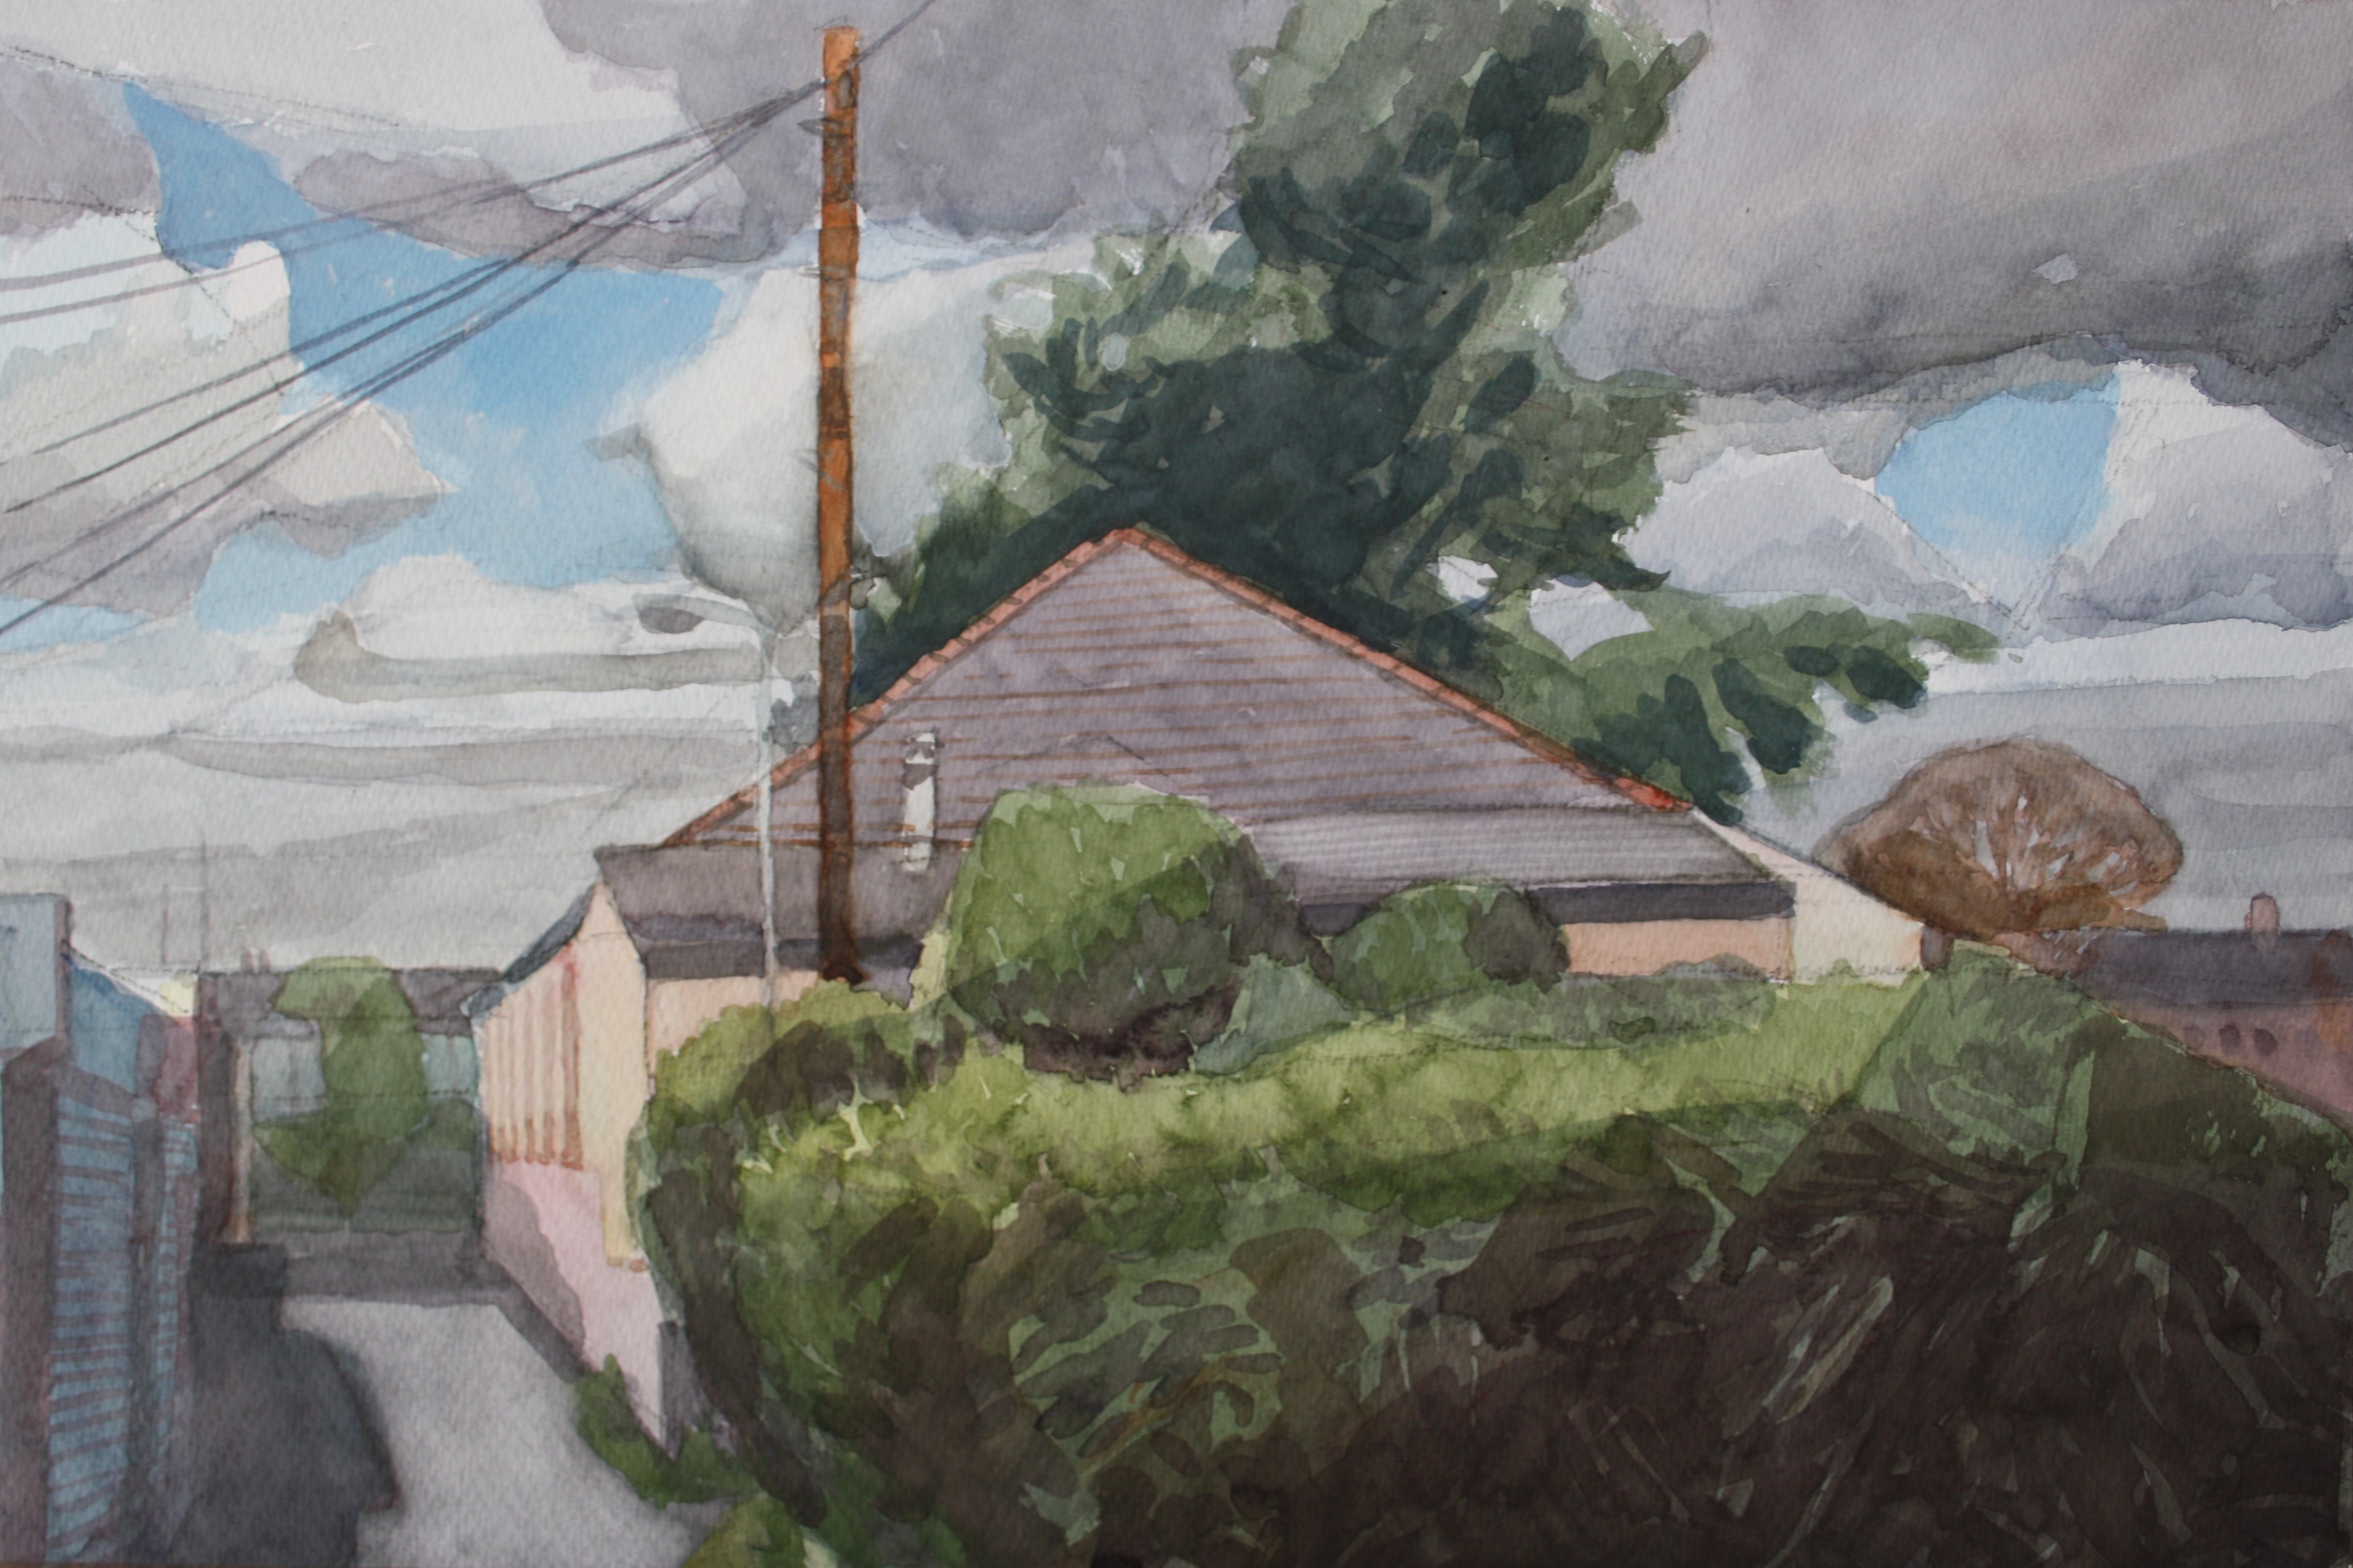 Sebastian Aplin, Heath Gospel Hall, Watercolour on paper, 36 x 54 cm, 2017